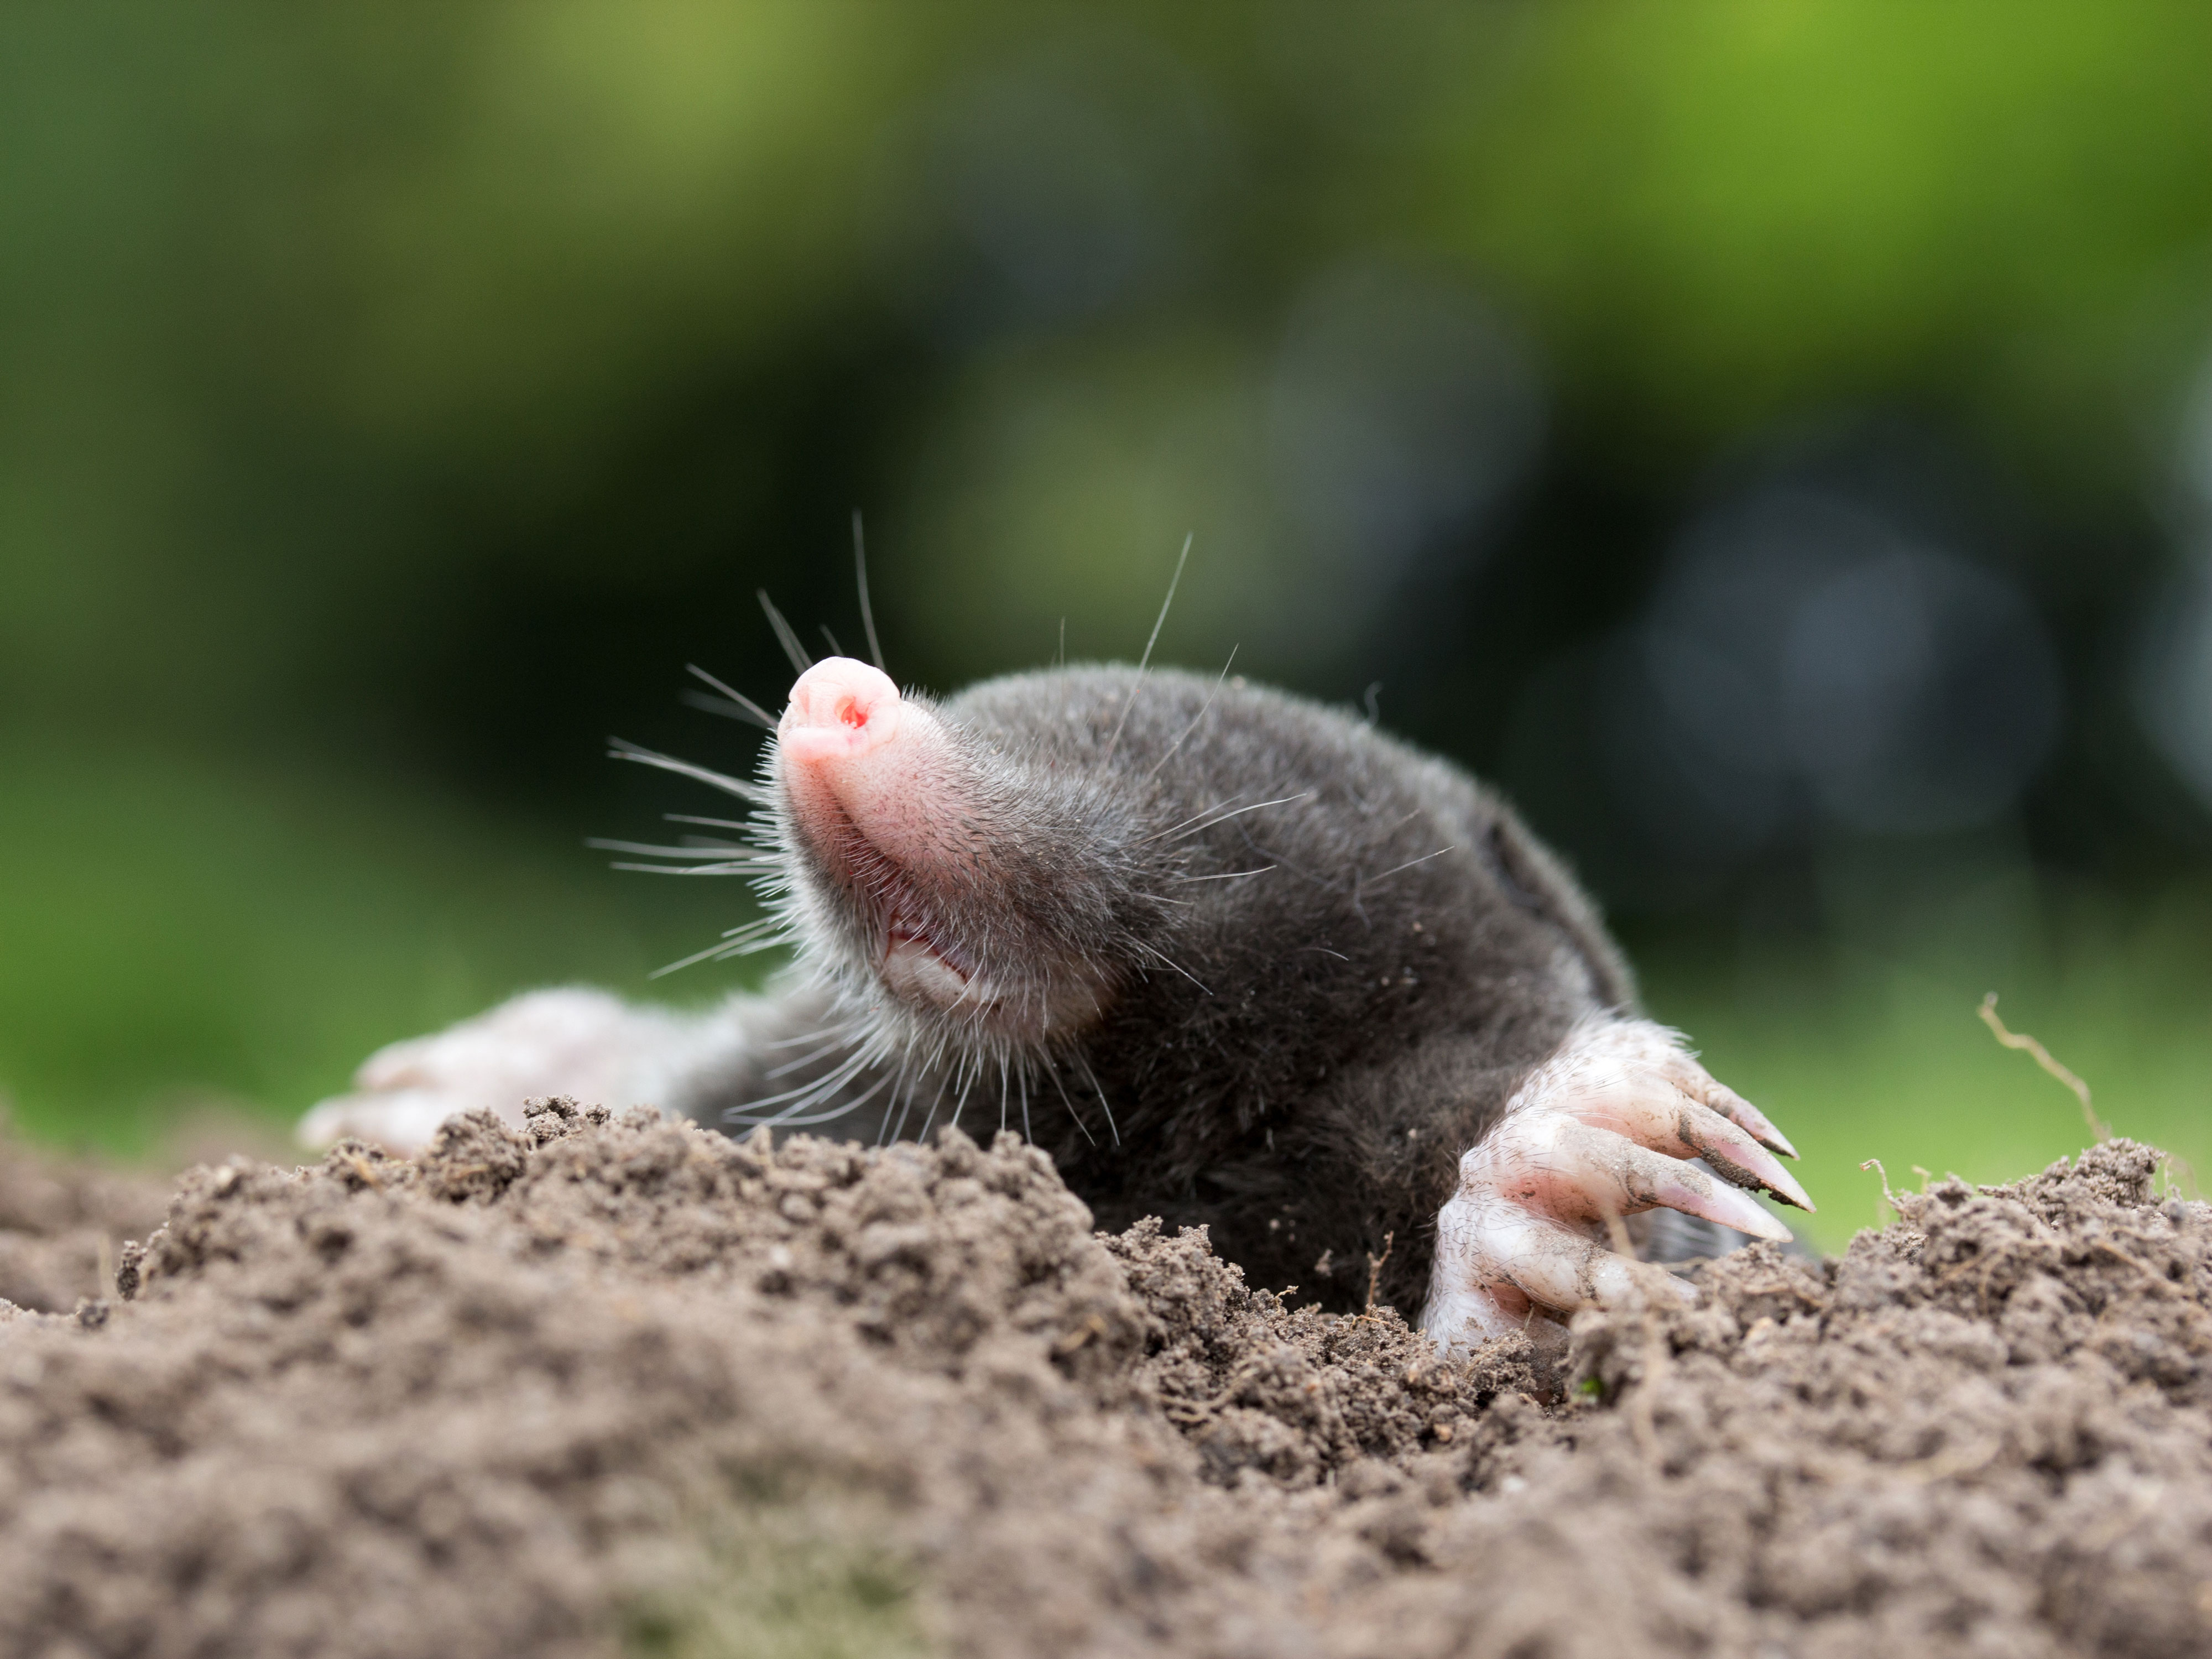 A mole crawling out of its molehill.